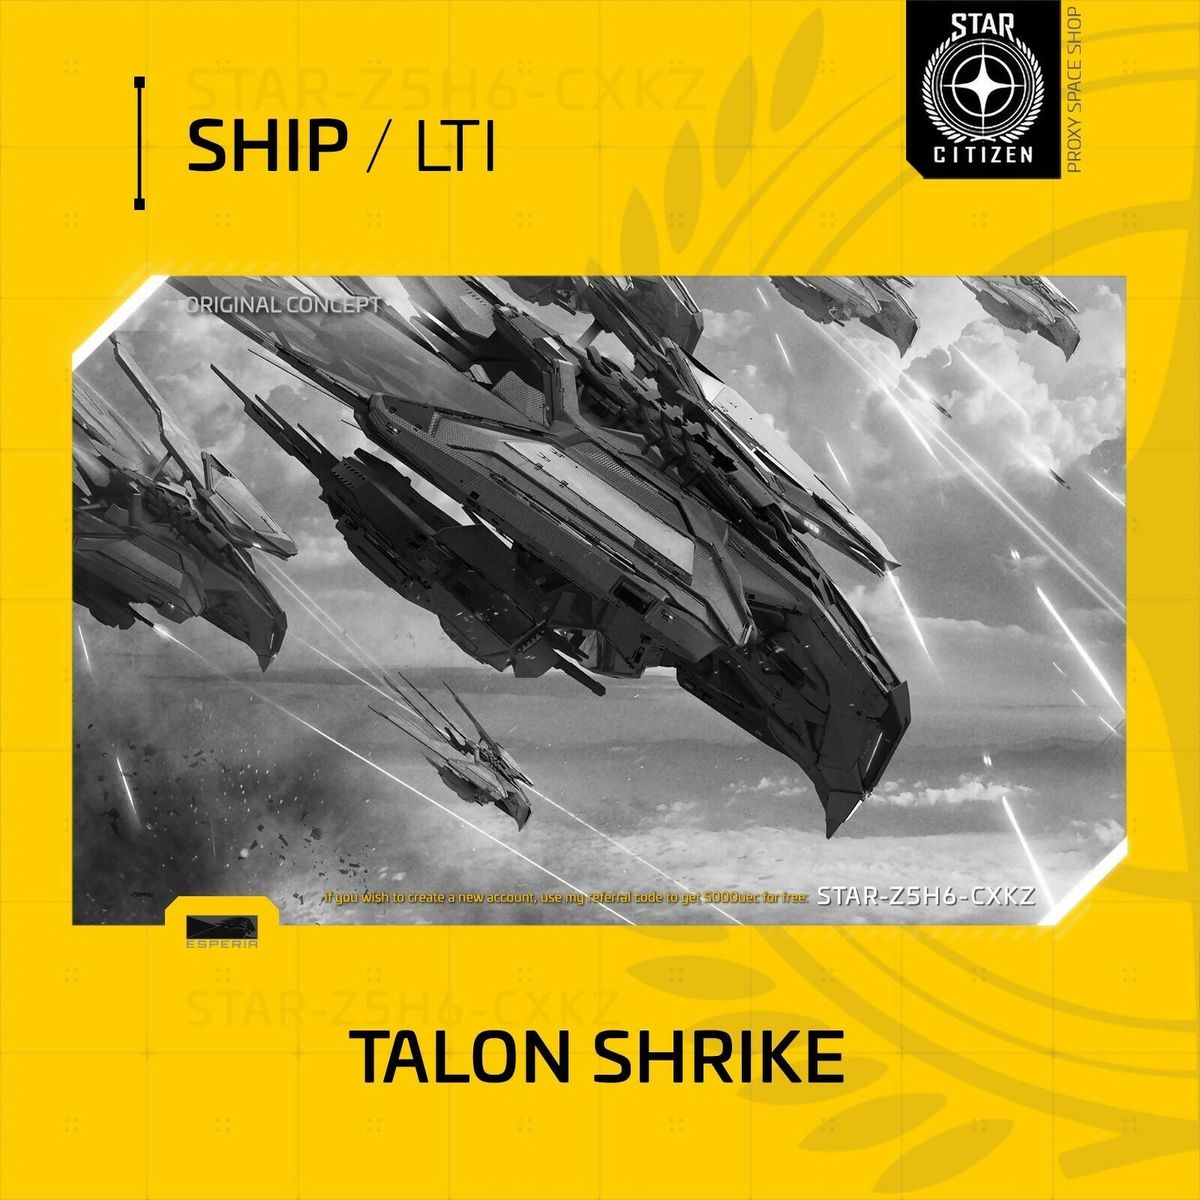 Esperia Talon Shrike - Lti - Original Concept OC